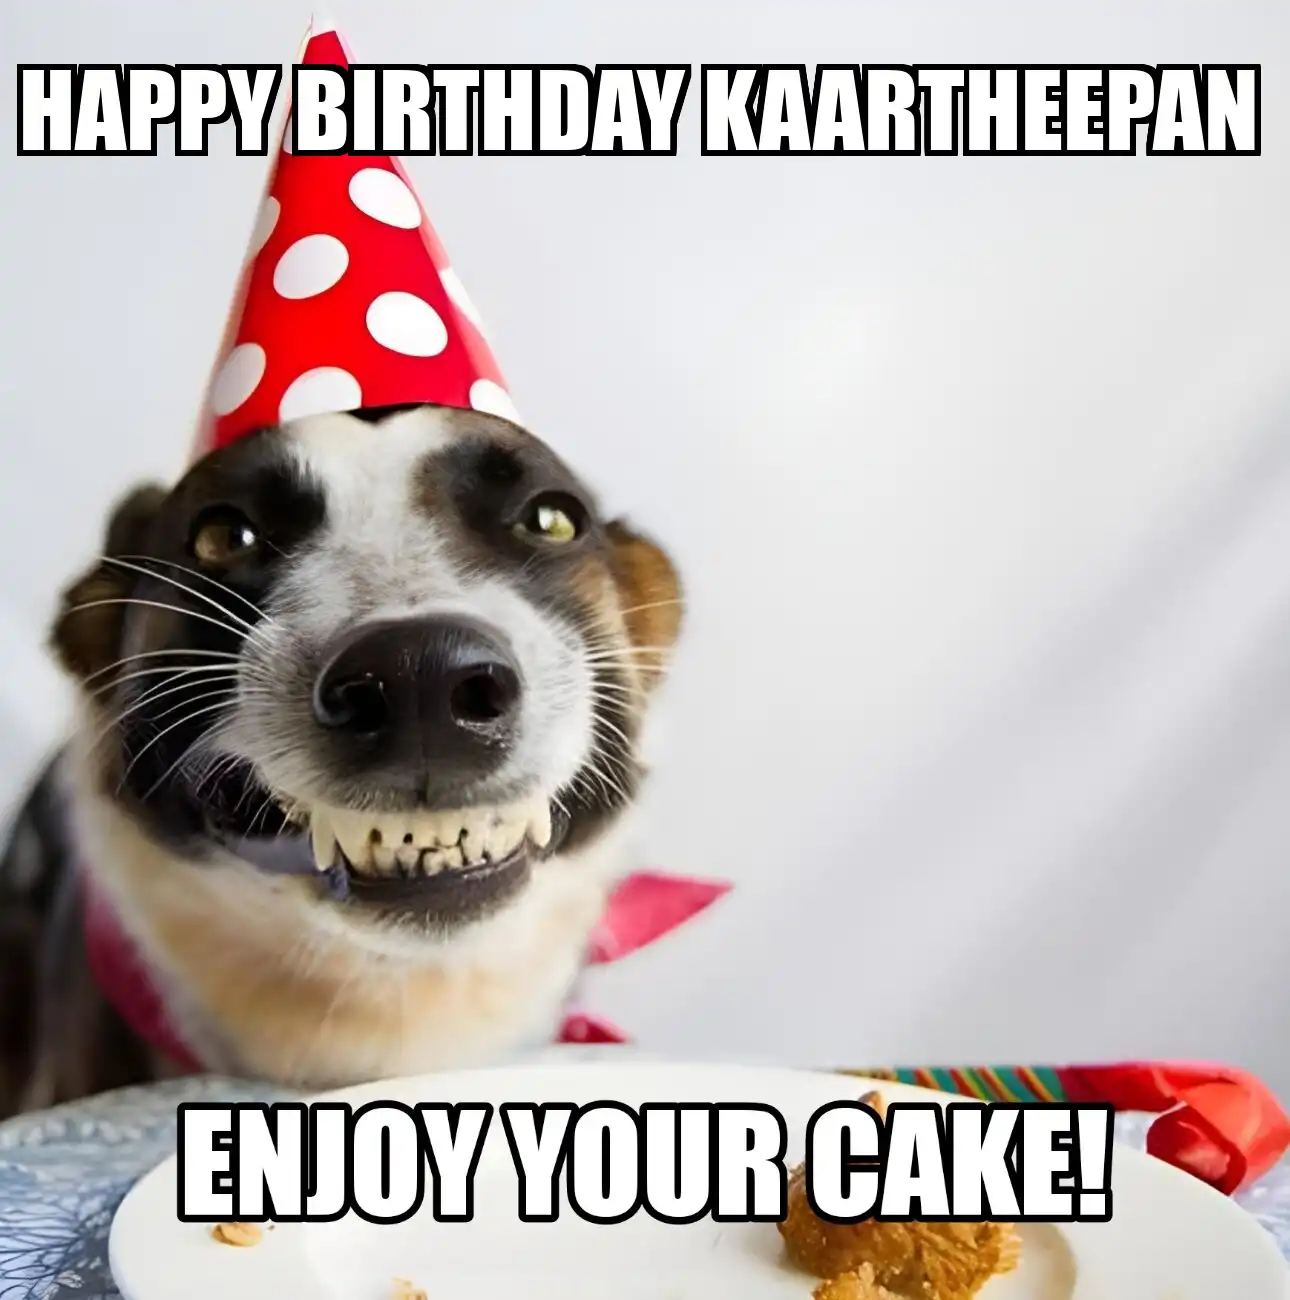 Happy Birthday Kaartheepan Enjoy Your Cake Dog Meme